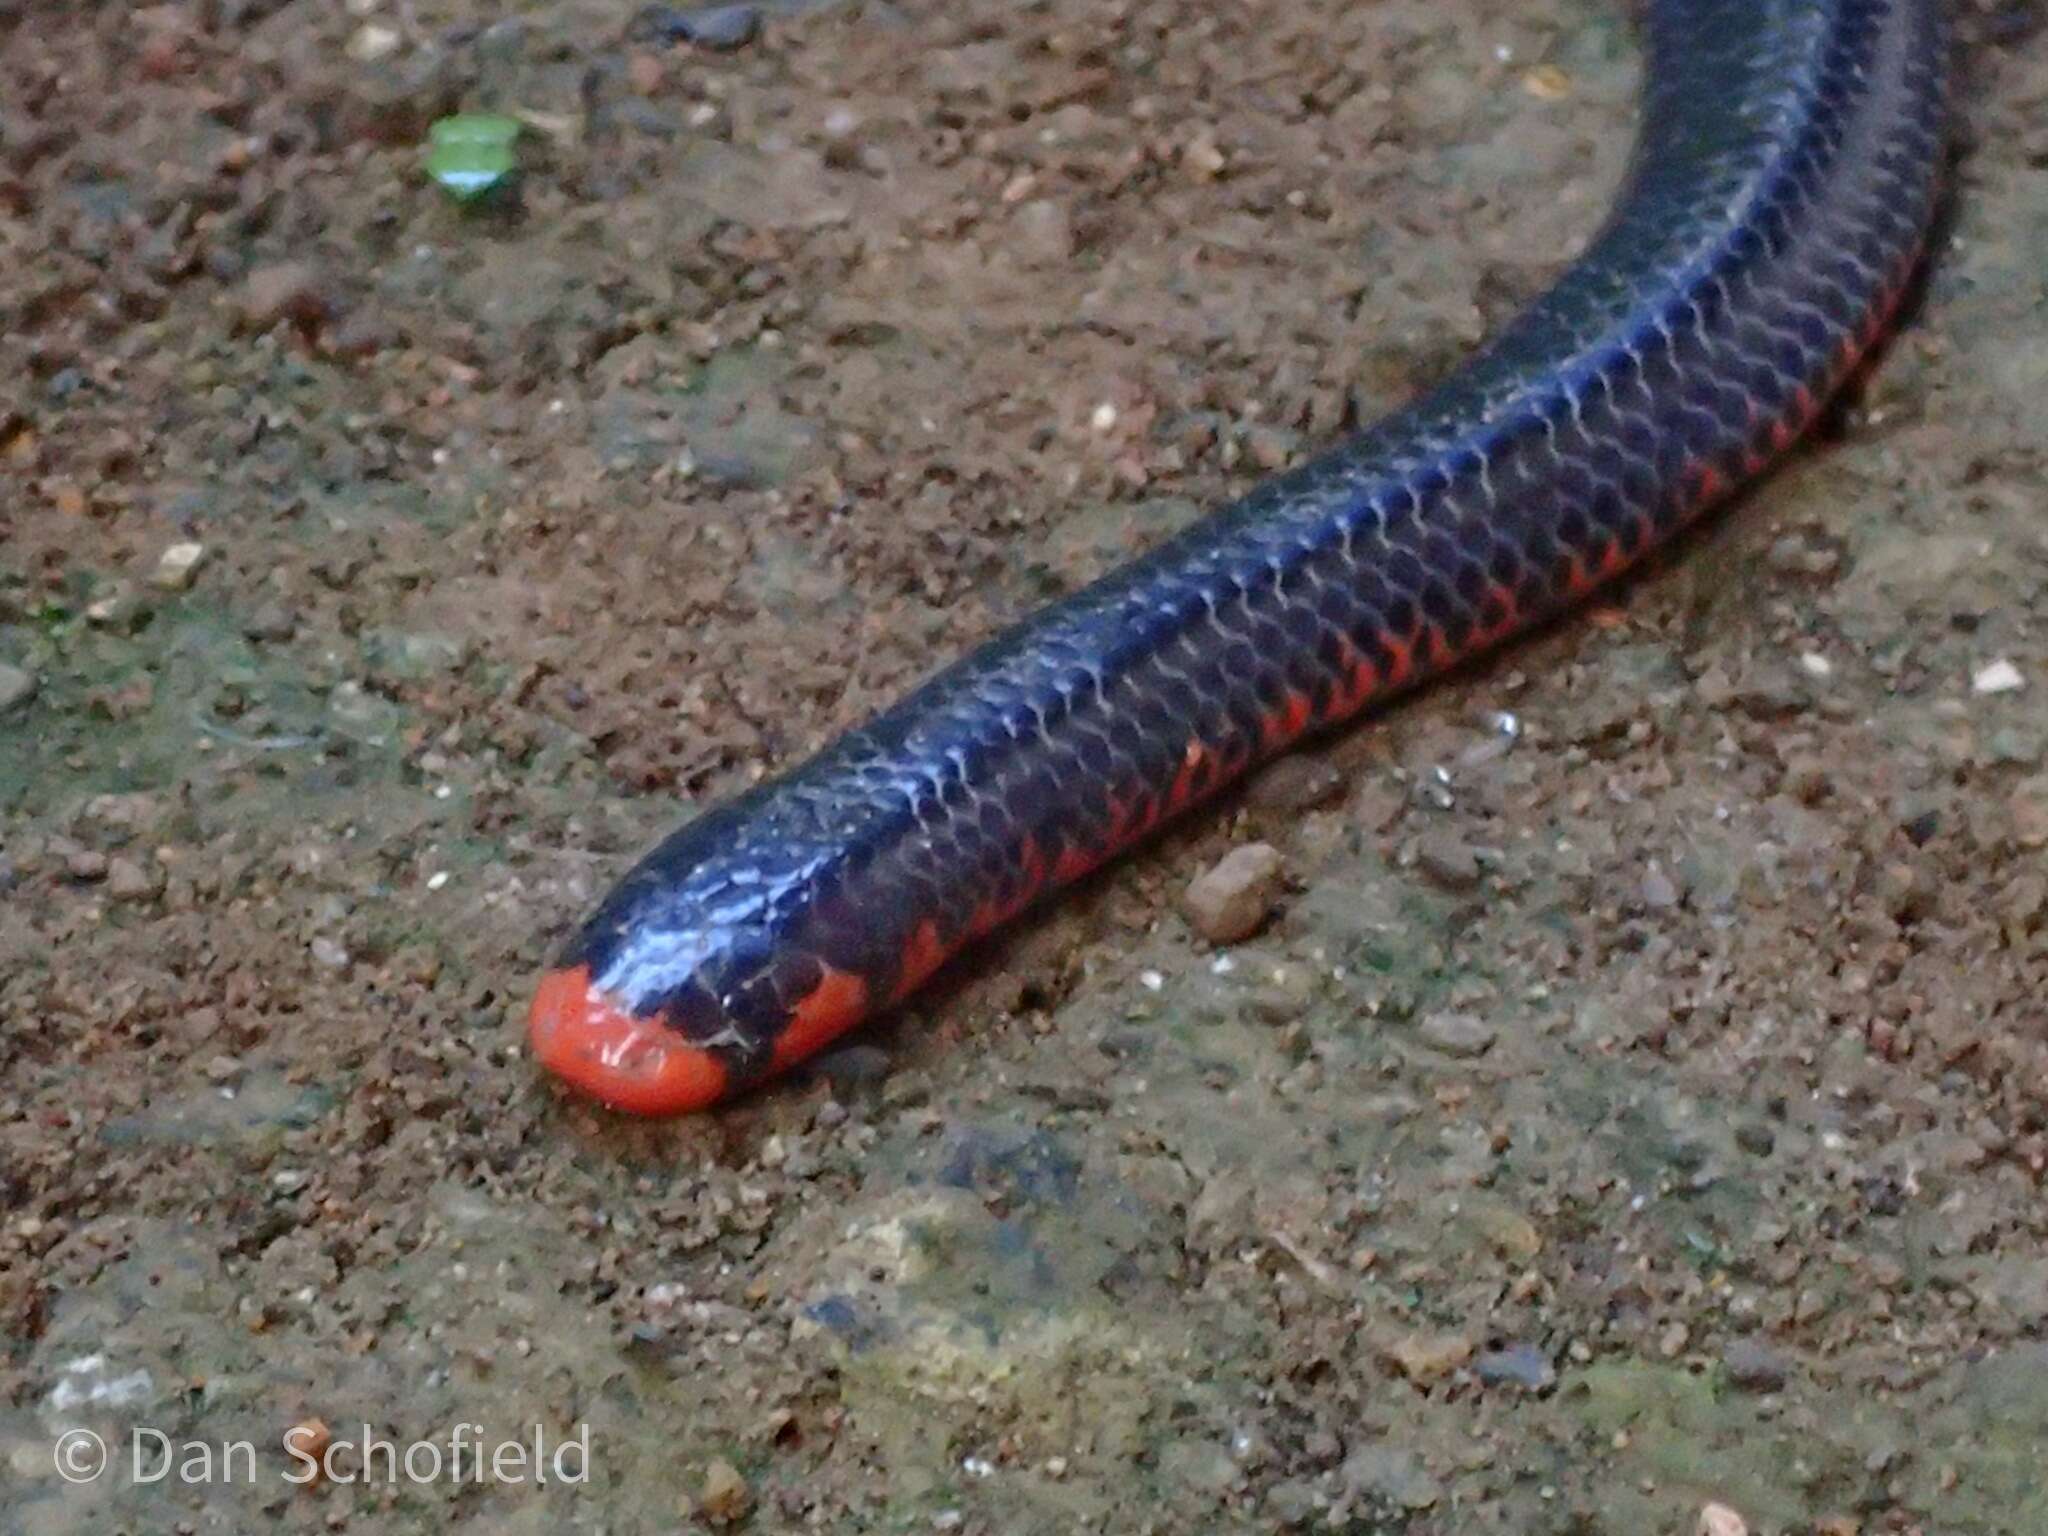 Image of Black Pipe Snake